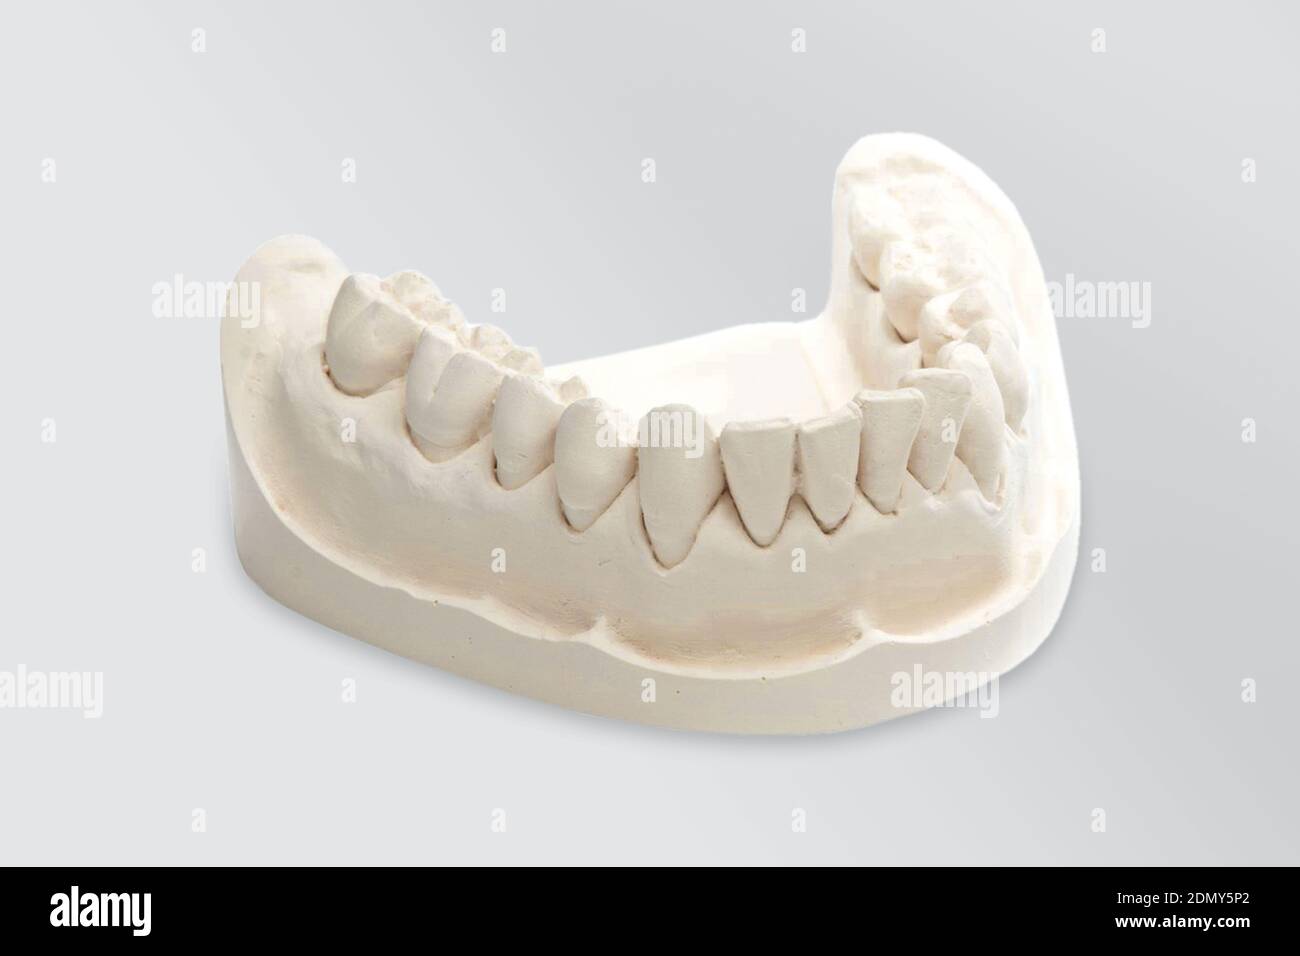 Teeth Mold  Dentalshop Com